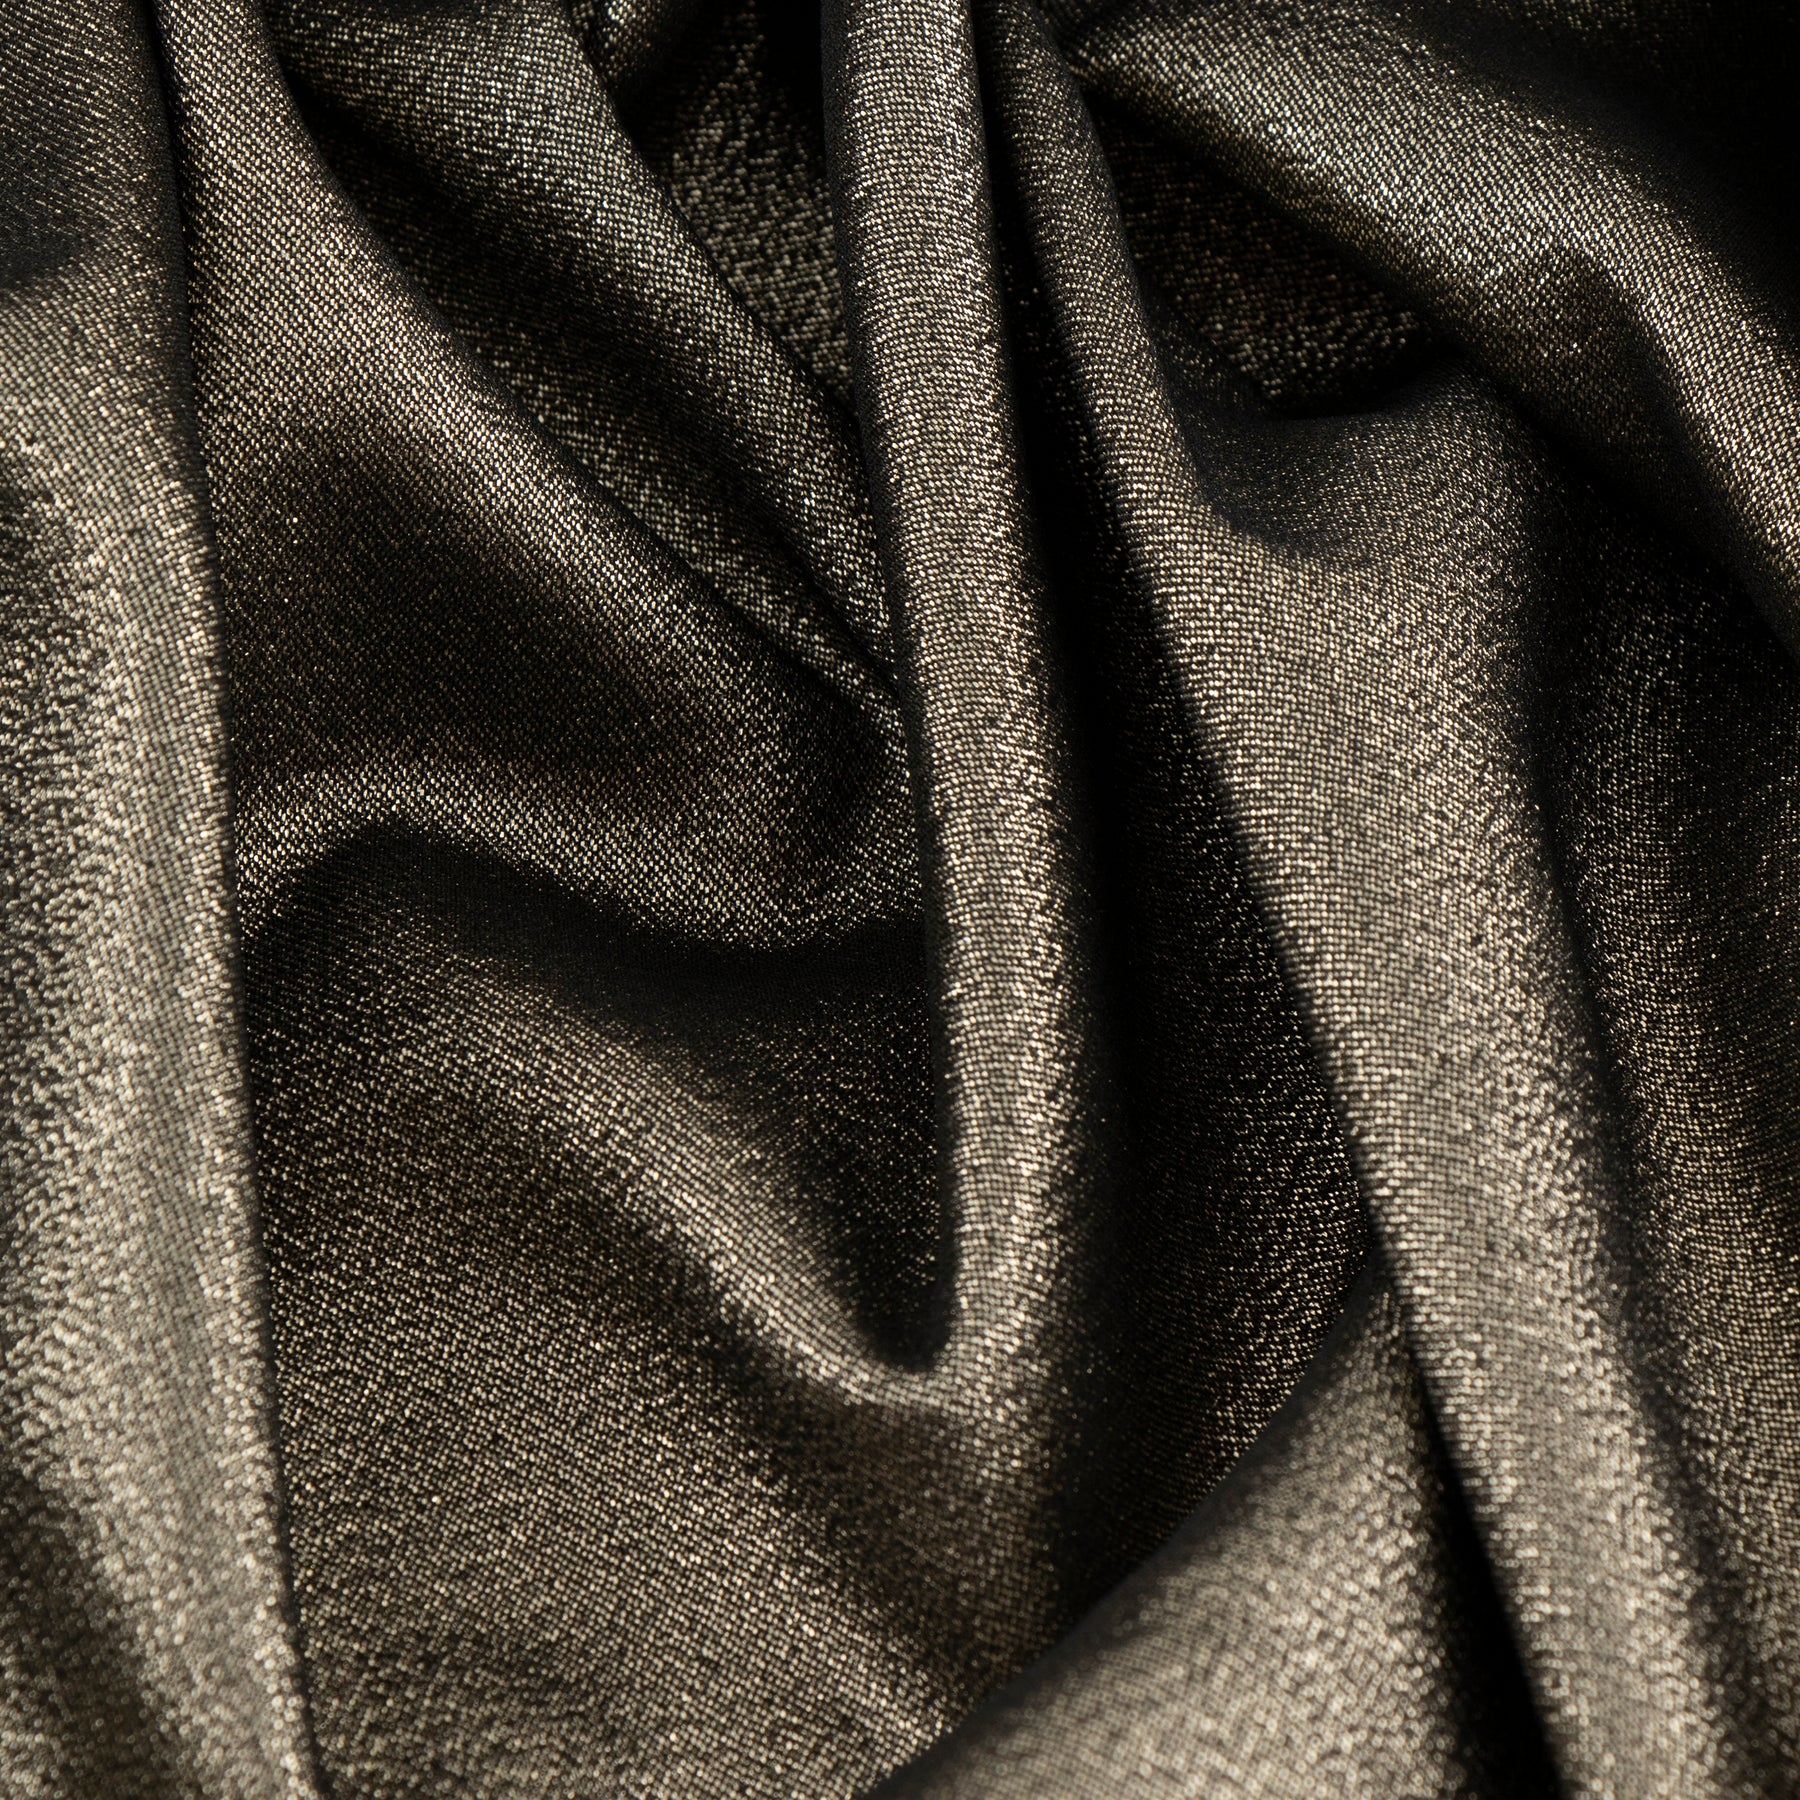 Yaya Han Iron on Rhinestone Trim 0.44 - Gold (2 Yards Min.) - Cosplay Trims - Fabric